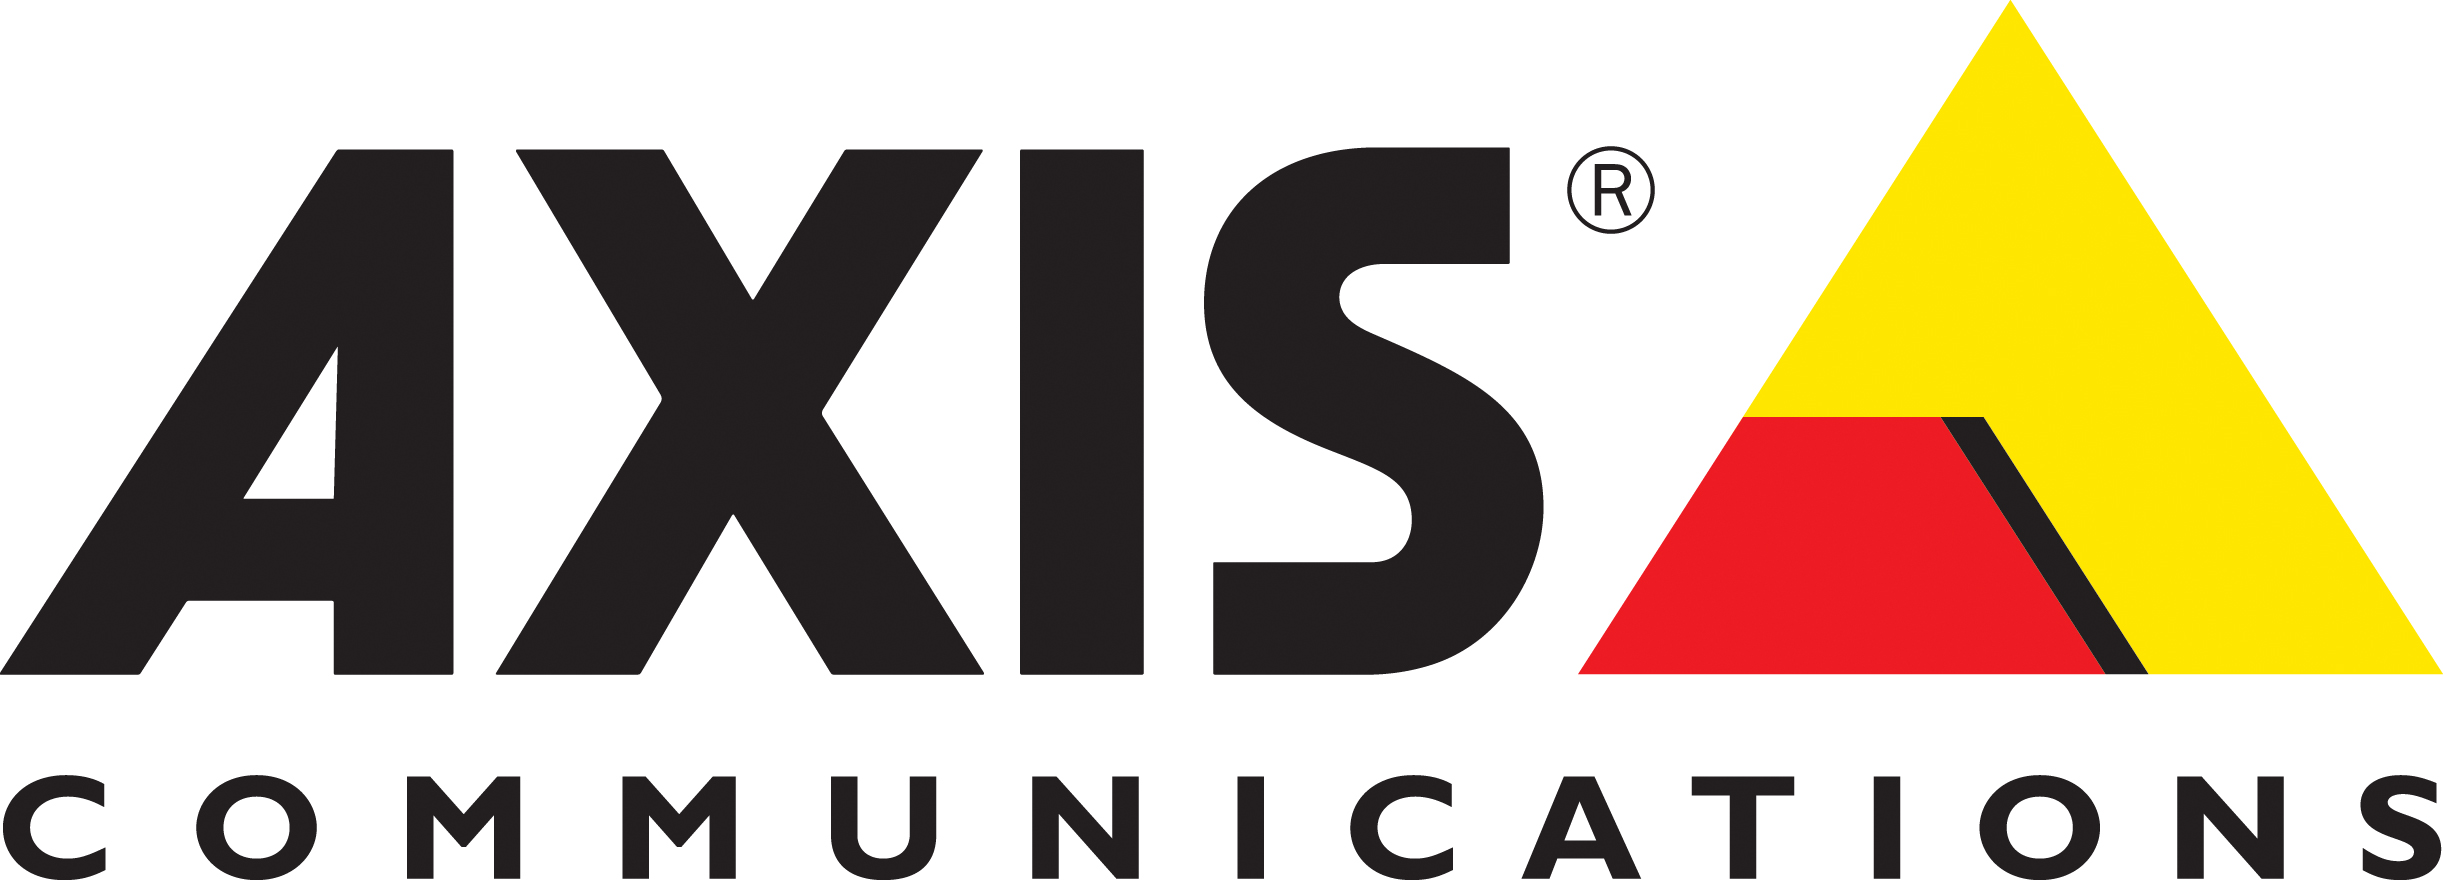 Axis Communication Logo_original.jpg